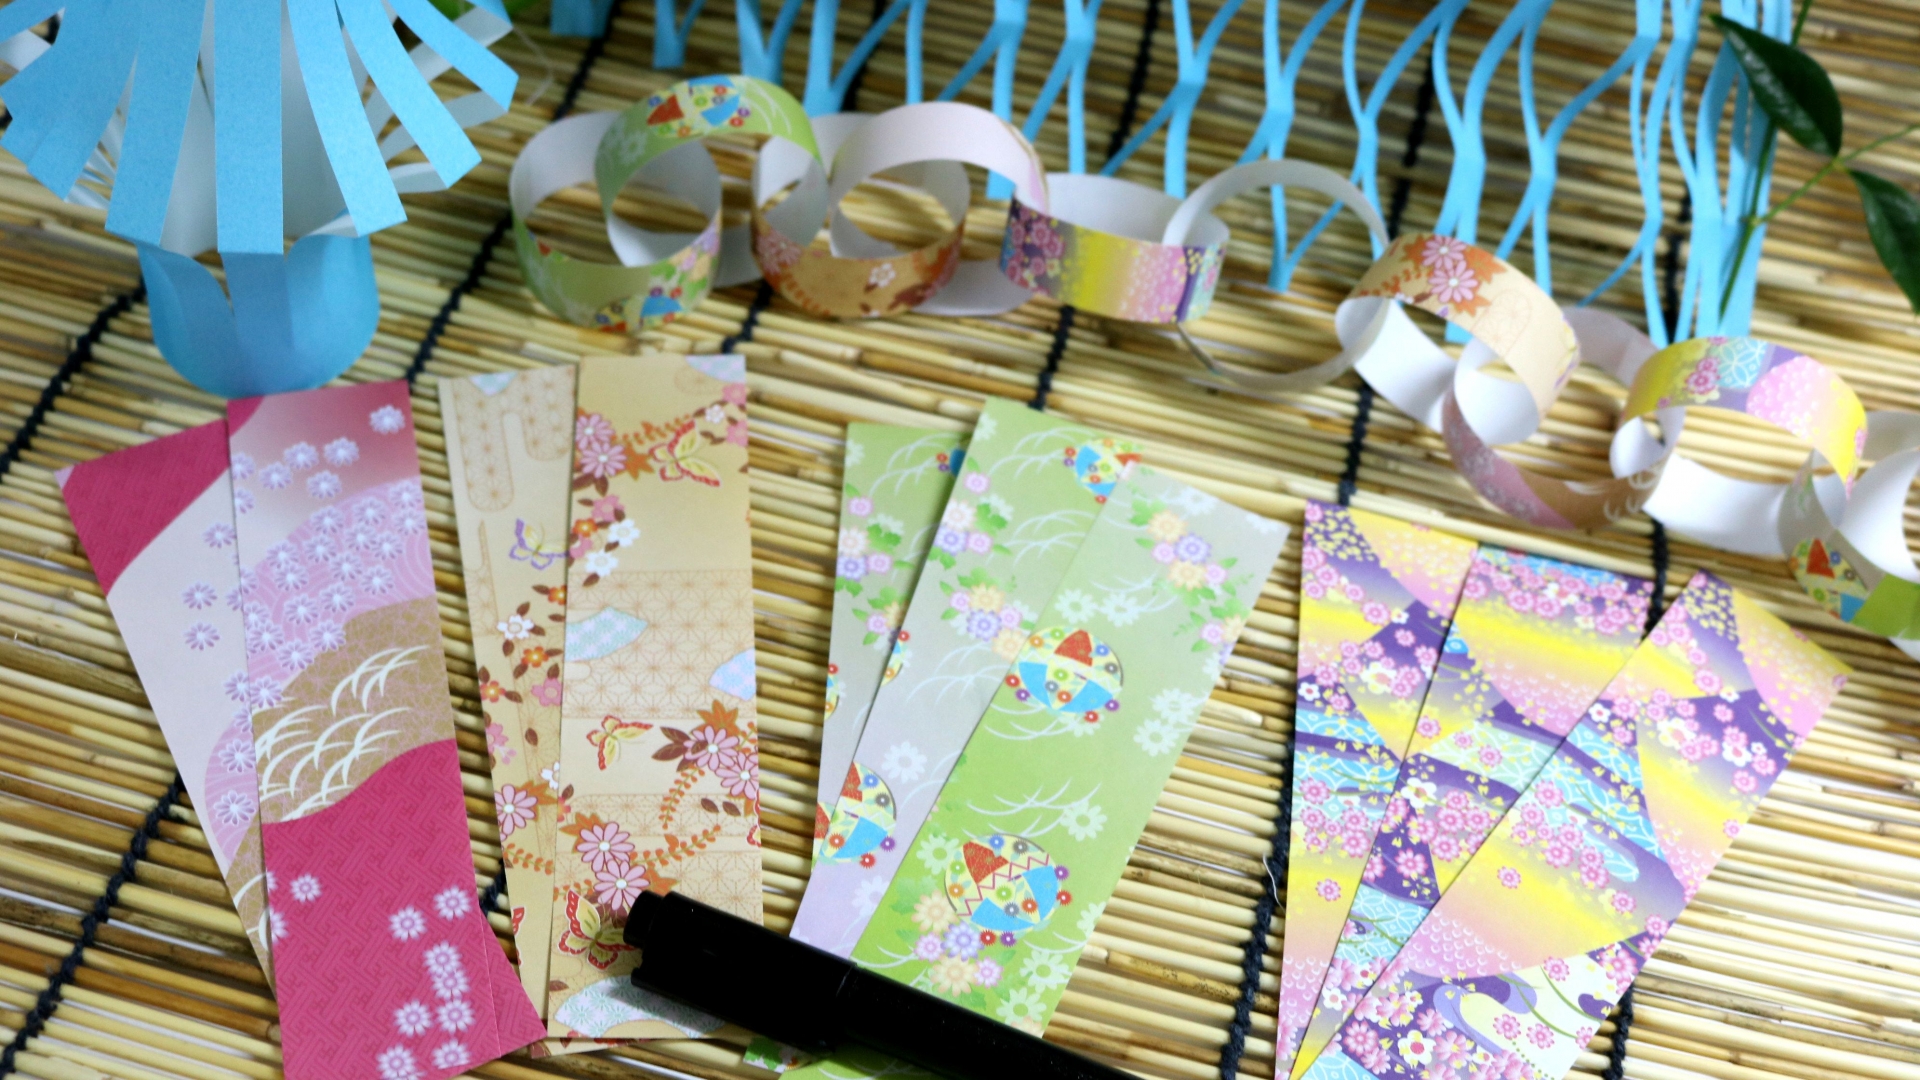 JPX Kitahama Festival 2022 “Wishes for Tanabata”